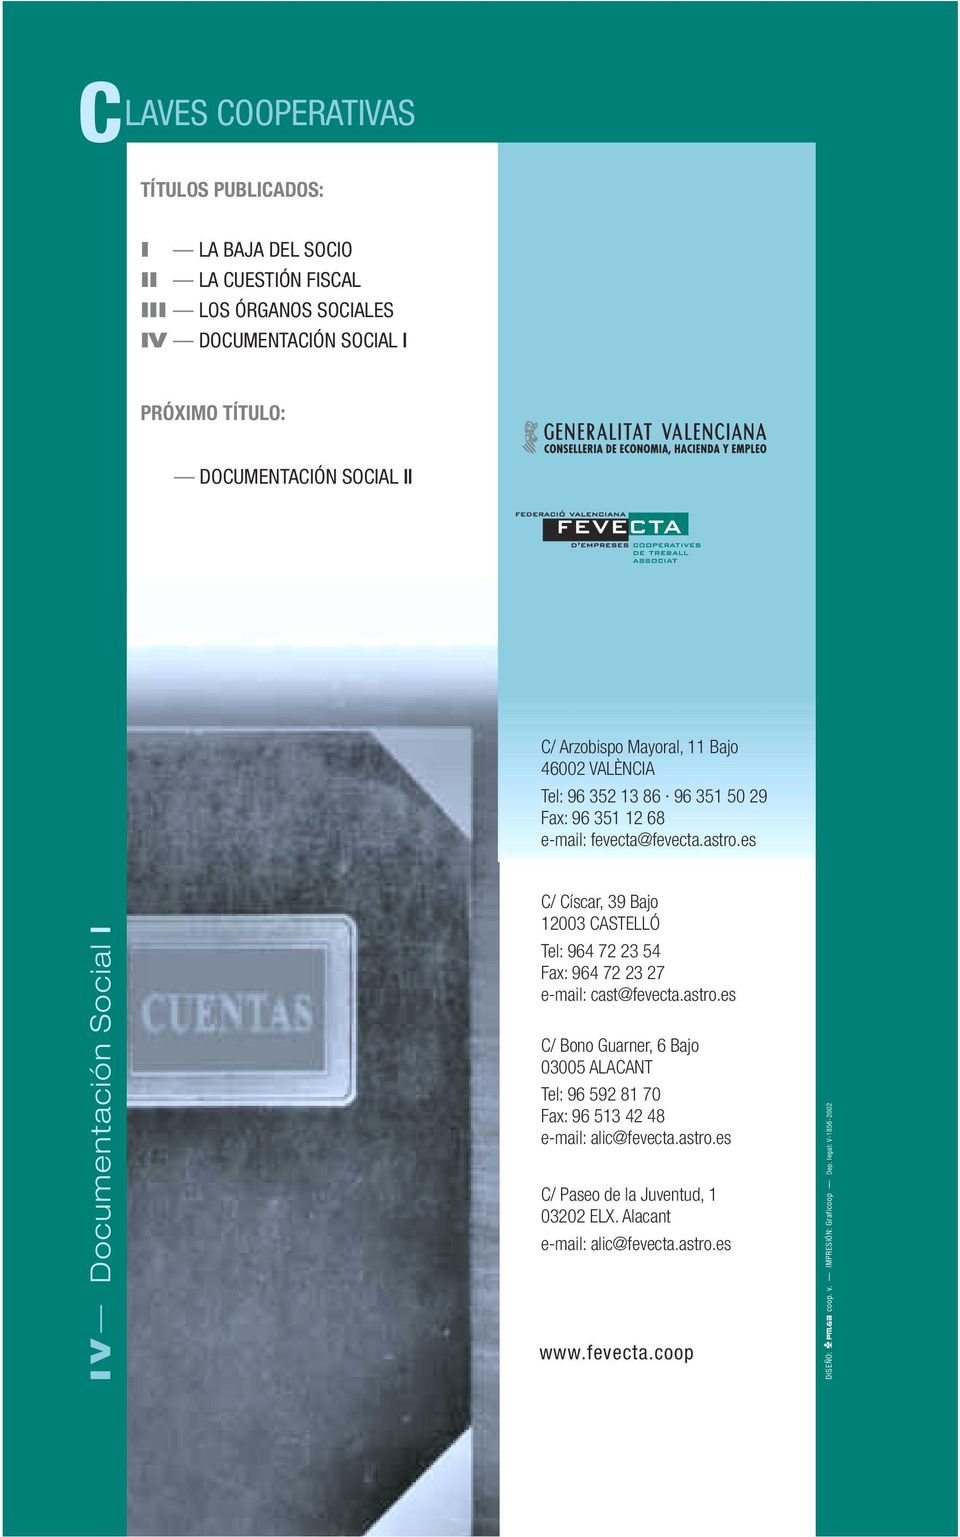 es IV Documentación Social I C/ Císcar, 39 Bajo 12003 CASTELLÓ Tel: 964 72 23 54 Fax: 964 72 23 27 e-mail: cast@fevecta.astro.